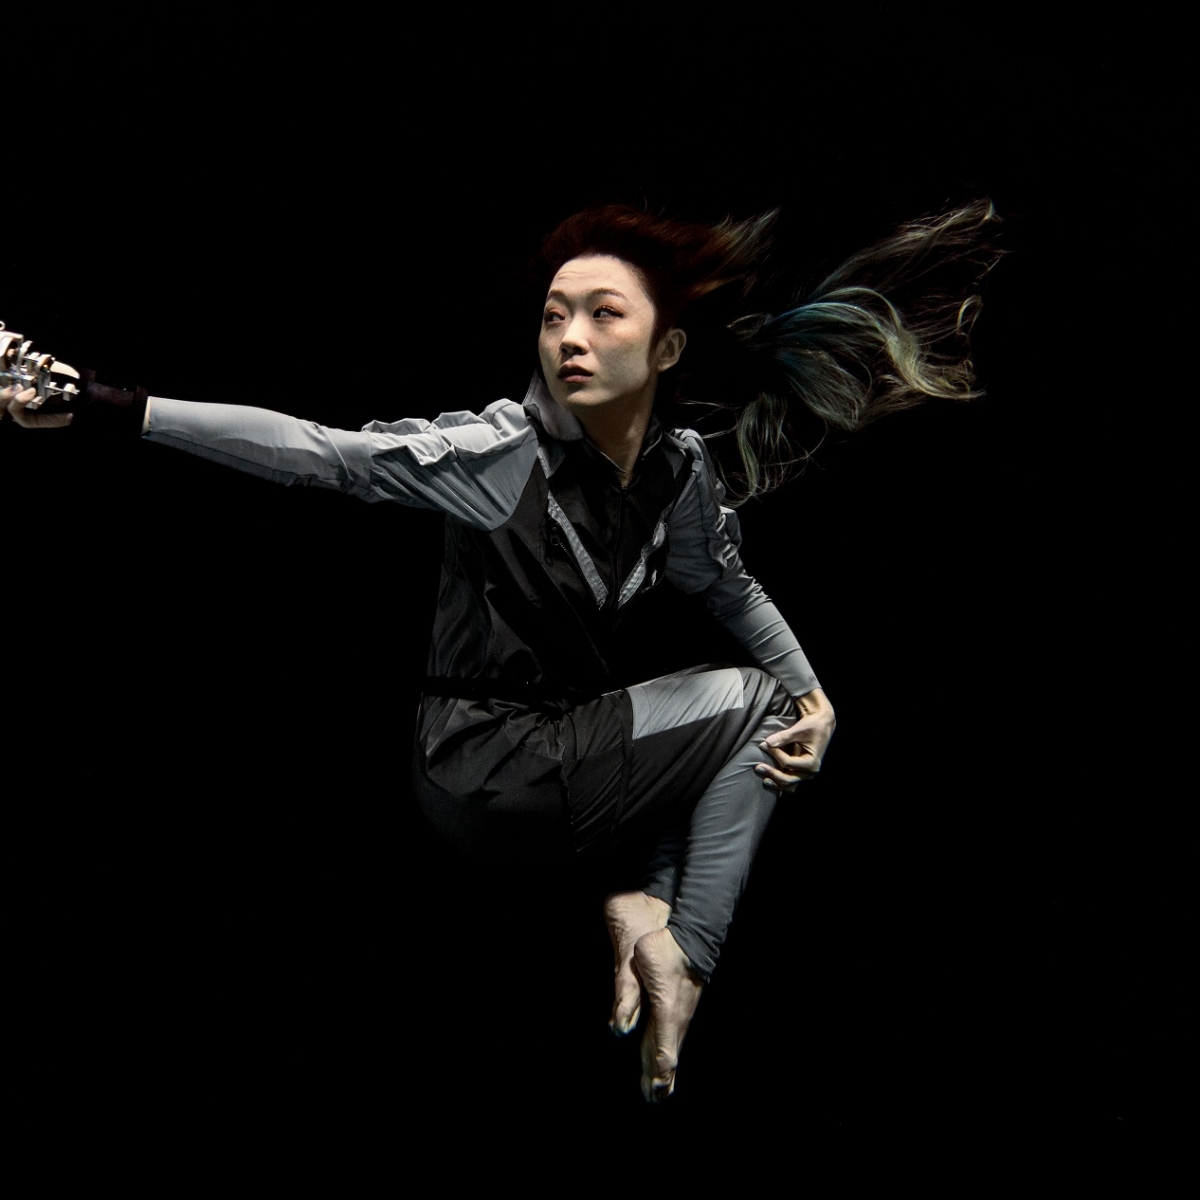 Image of Xin Liu floating in space.